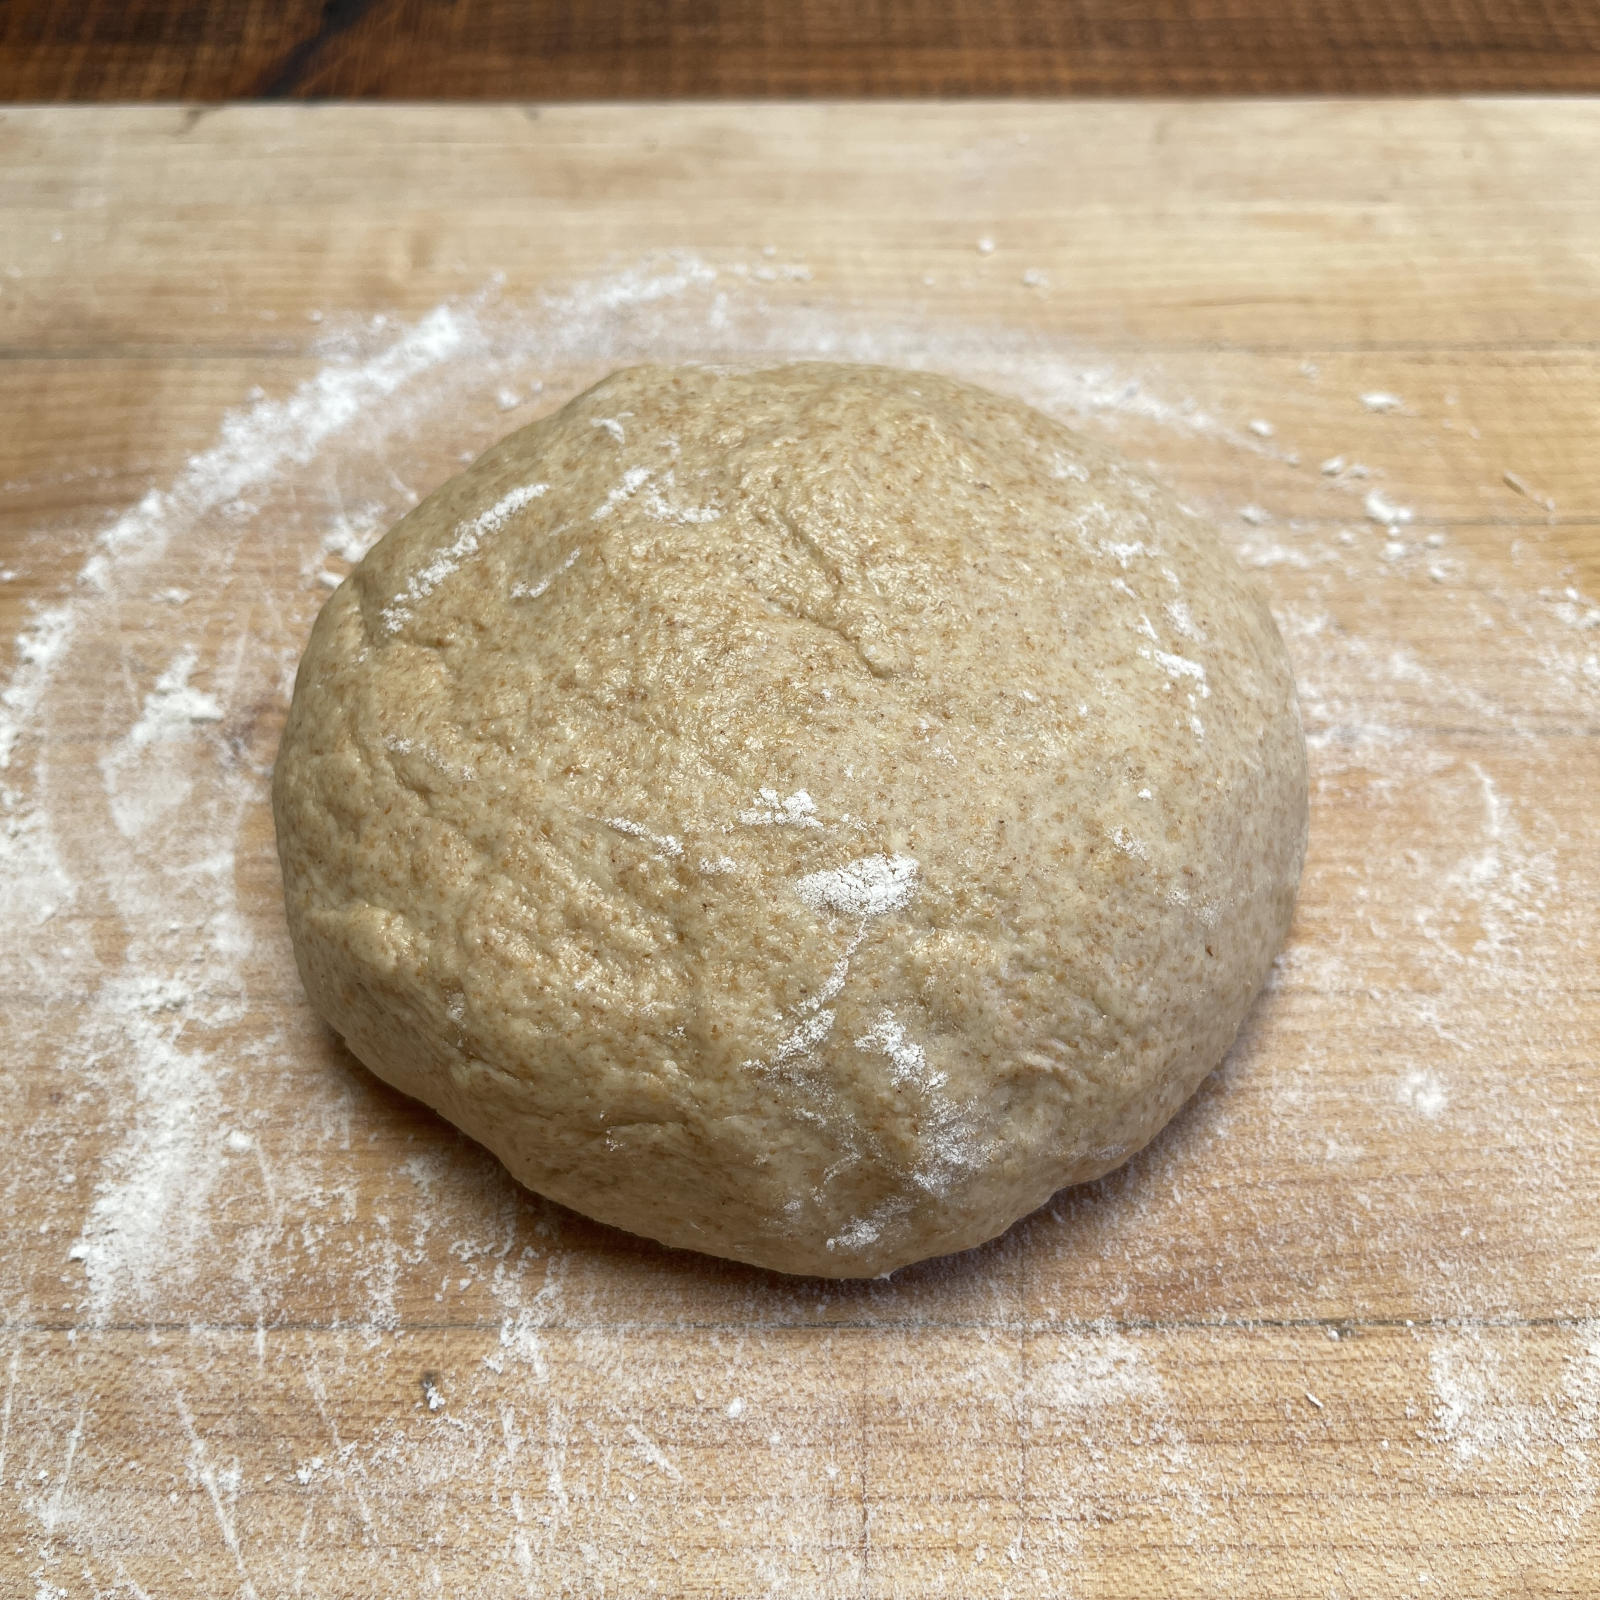 Whole Wheat Flour Tortillas Are Easy to Make - Zero-Waste Chef